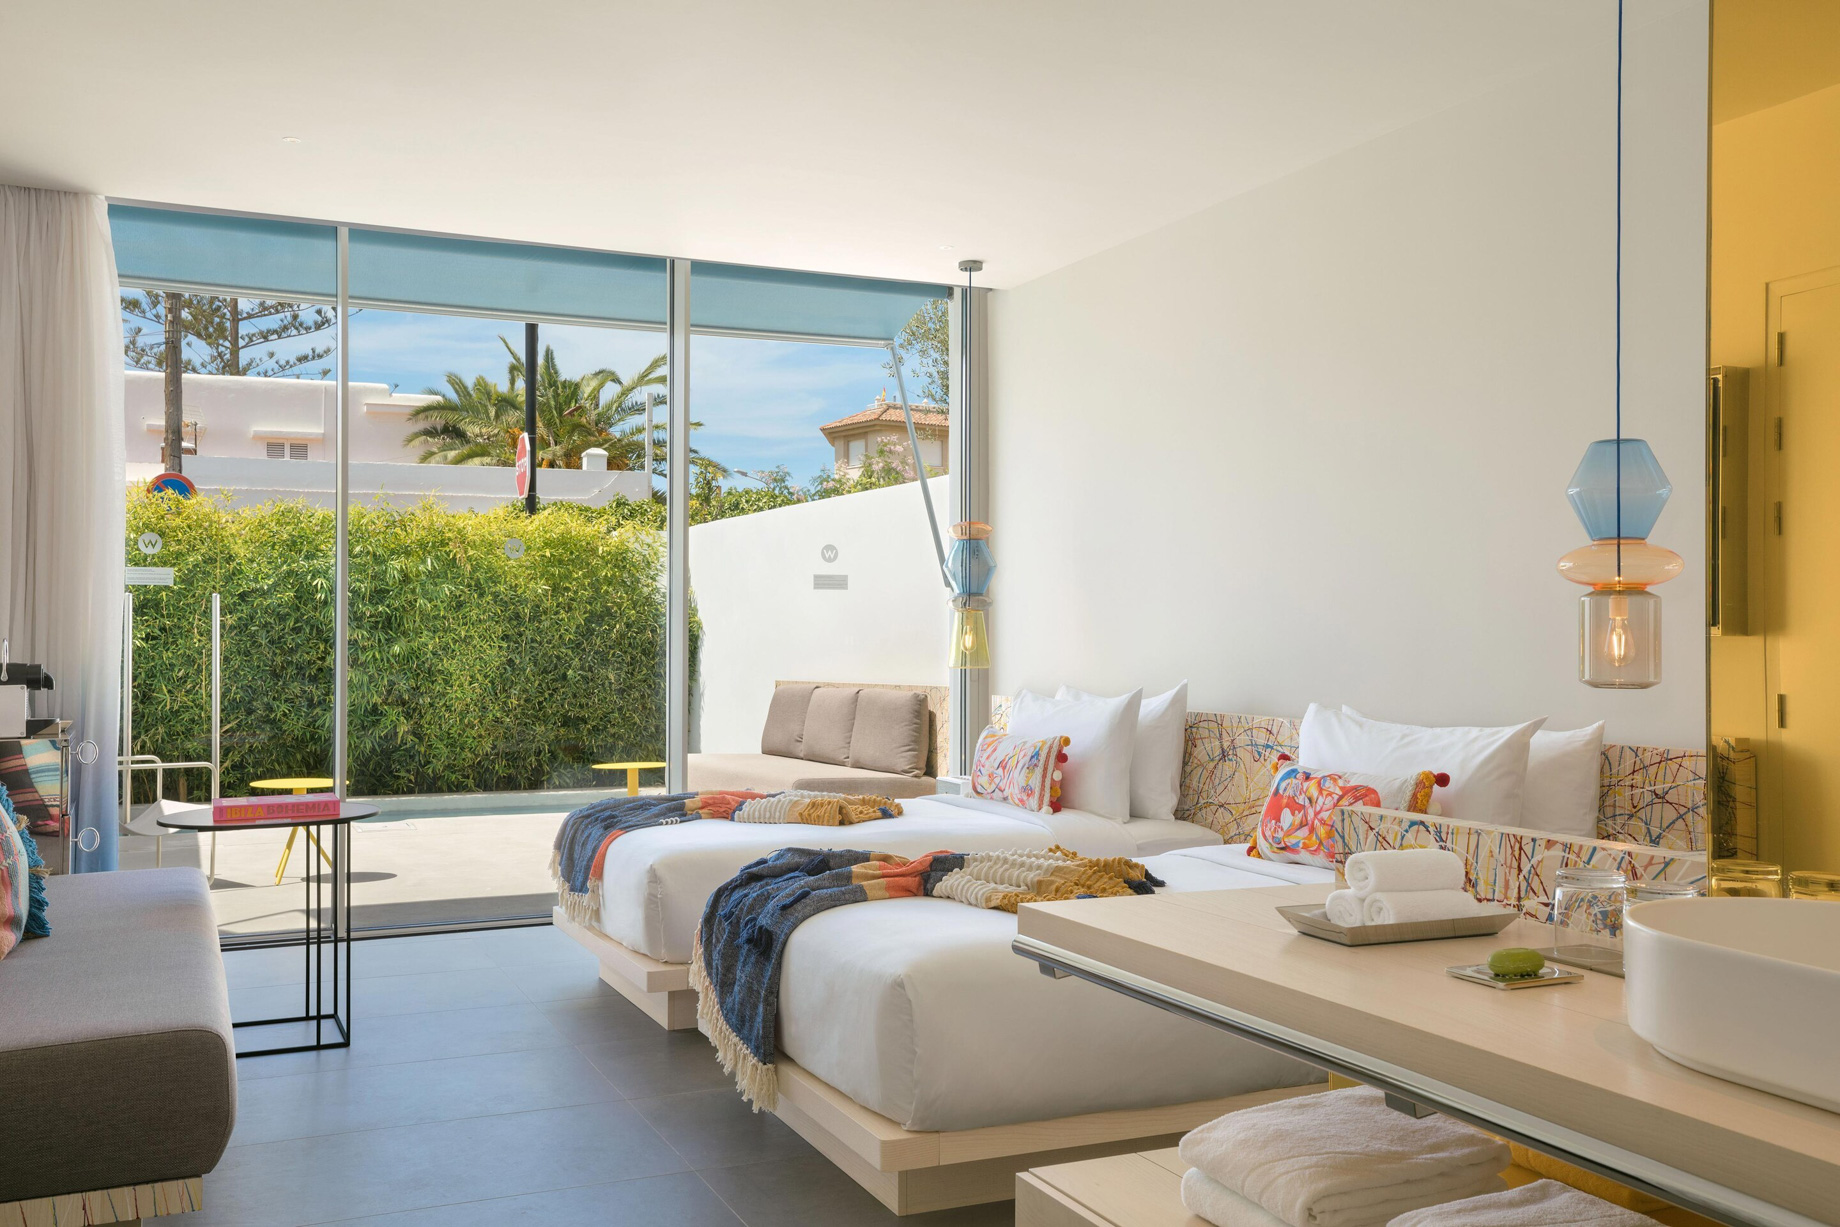 W Ibiza Hotel - Santa Eulalia del Rio, Spain - Spectacular Twin Guest Room